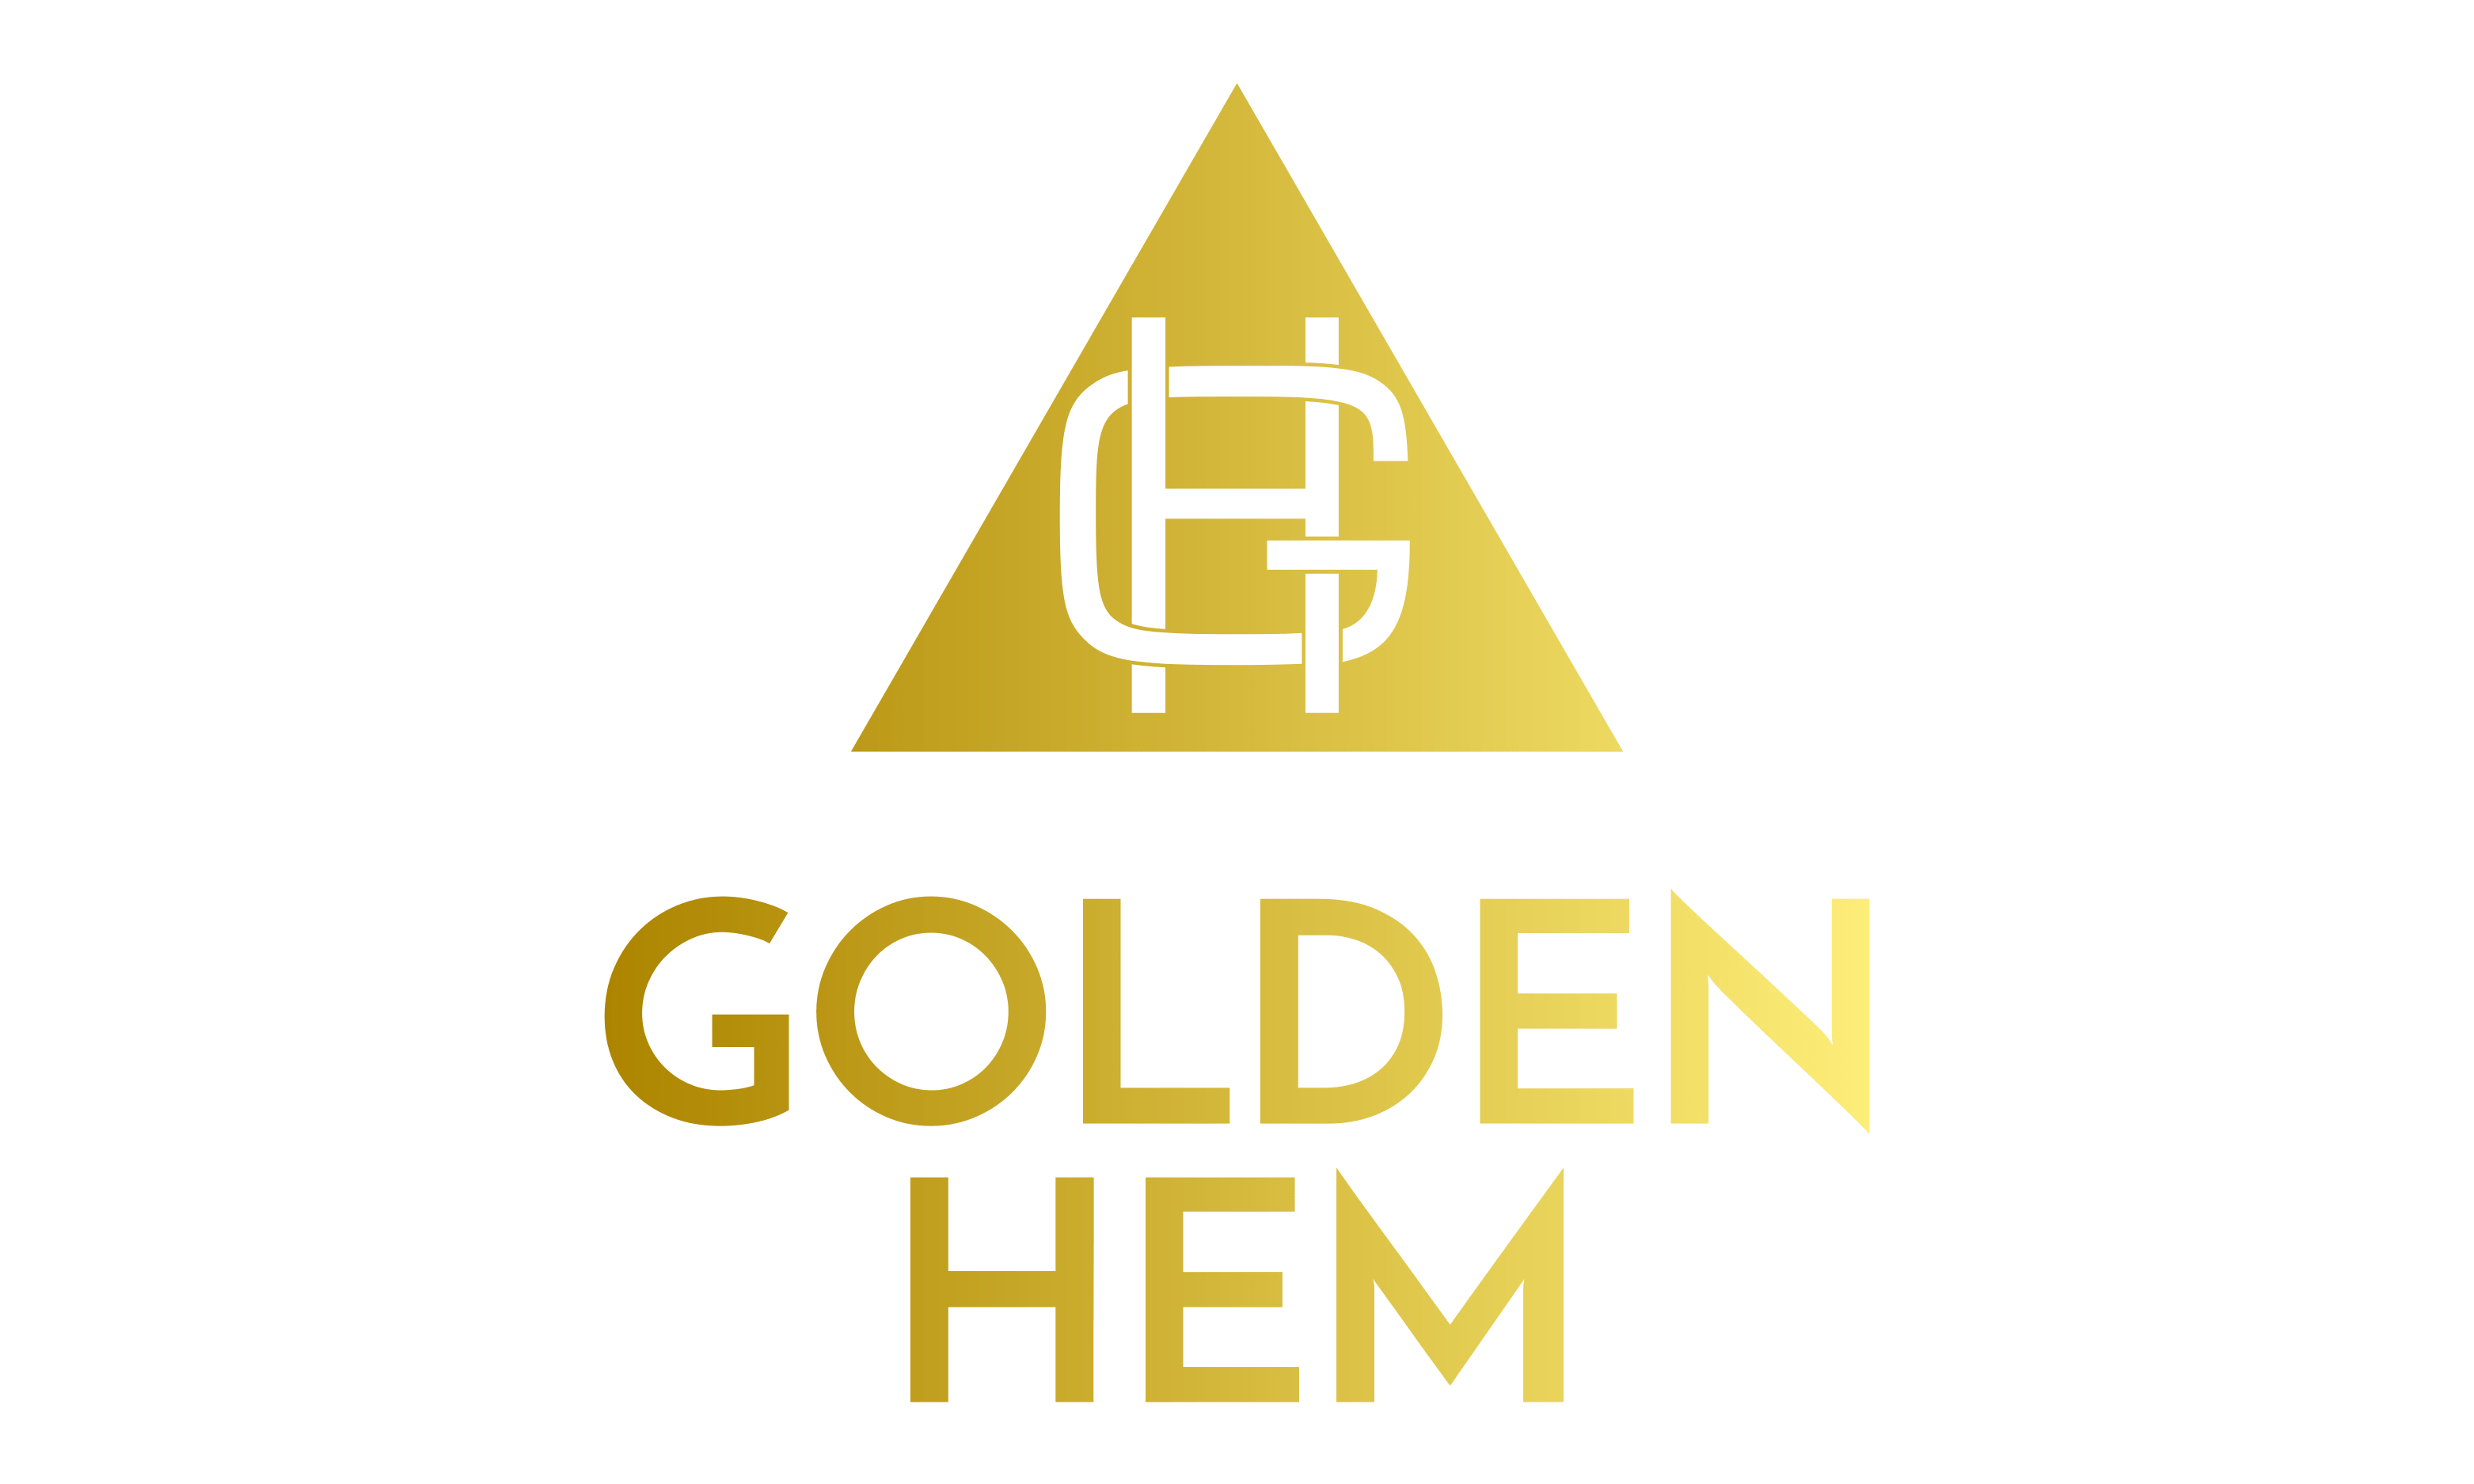 Profile image of venue Golden Hem